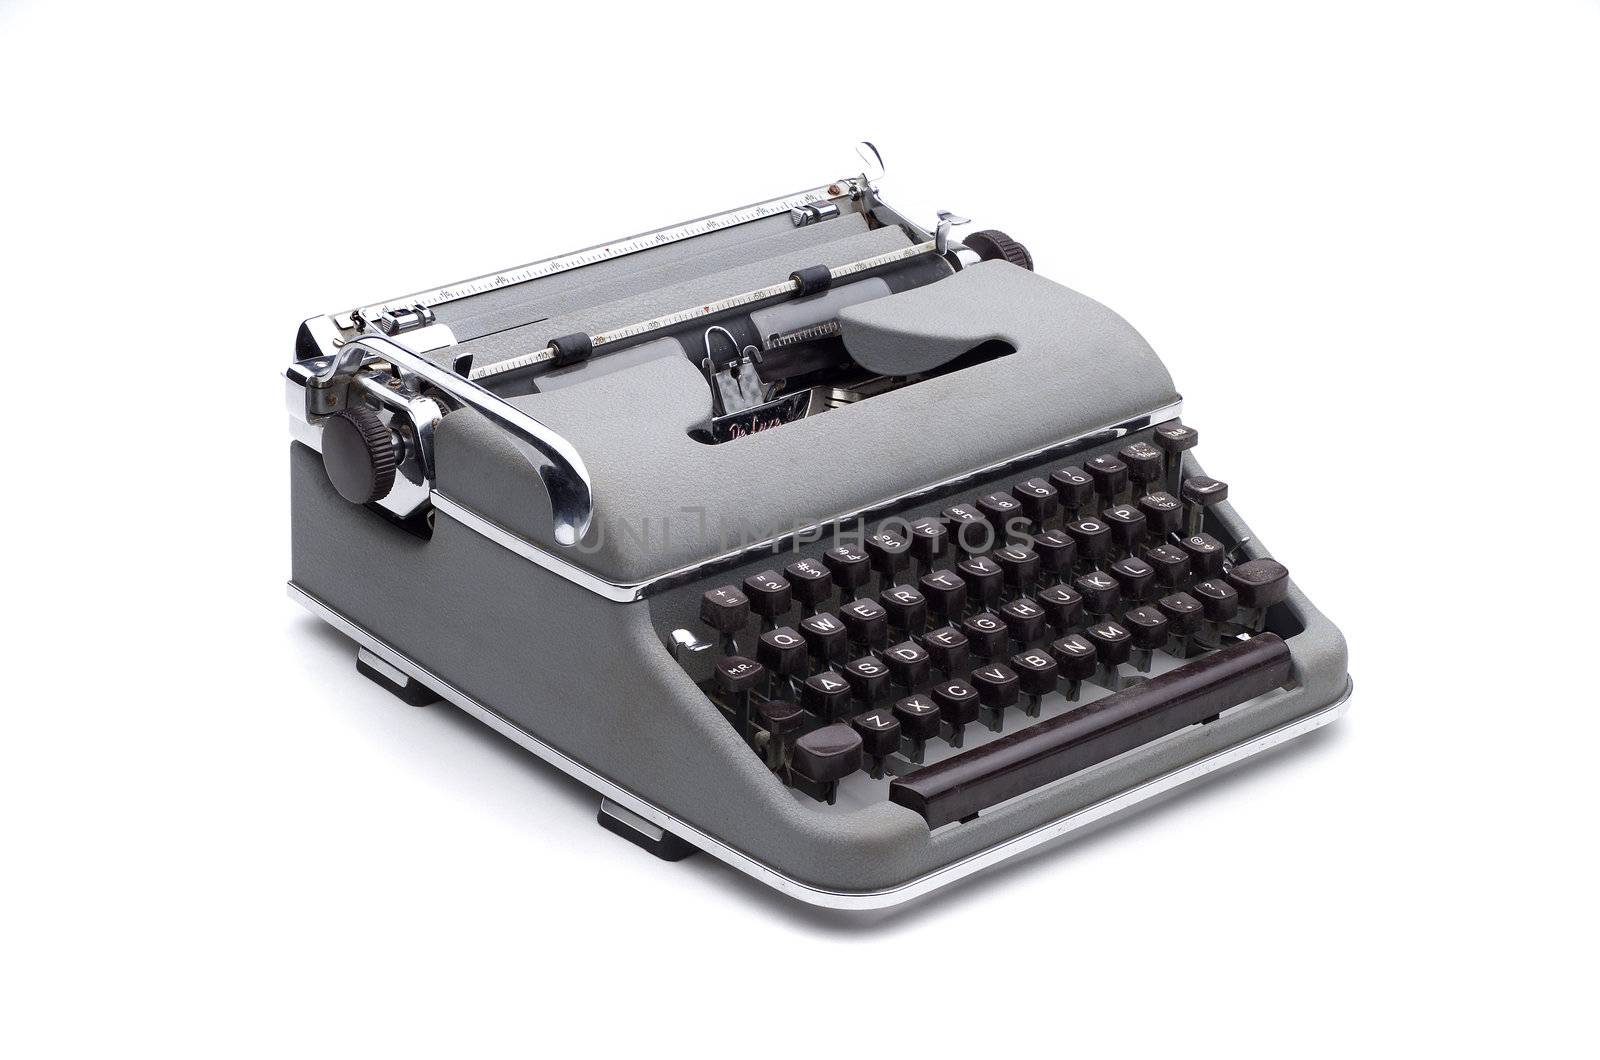 Vintage portable typewriter on white, isolated